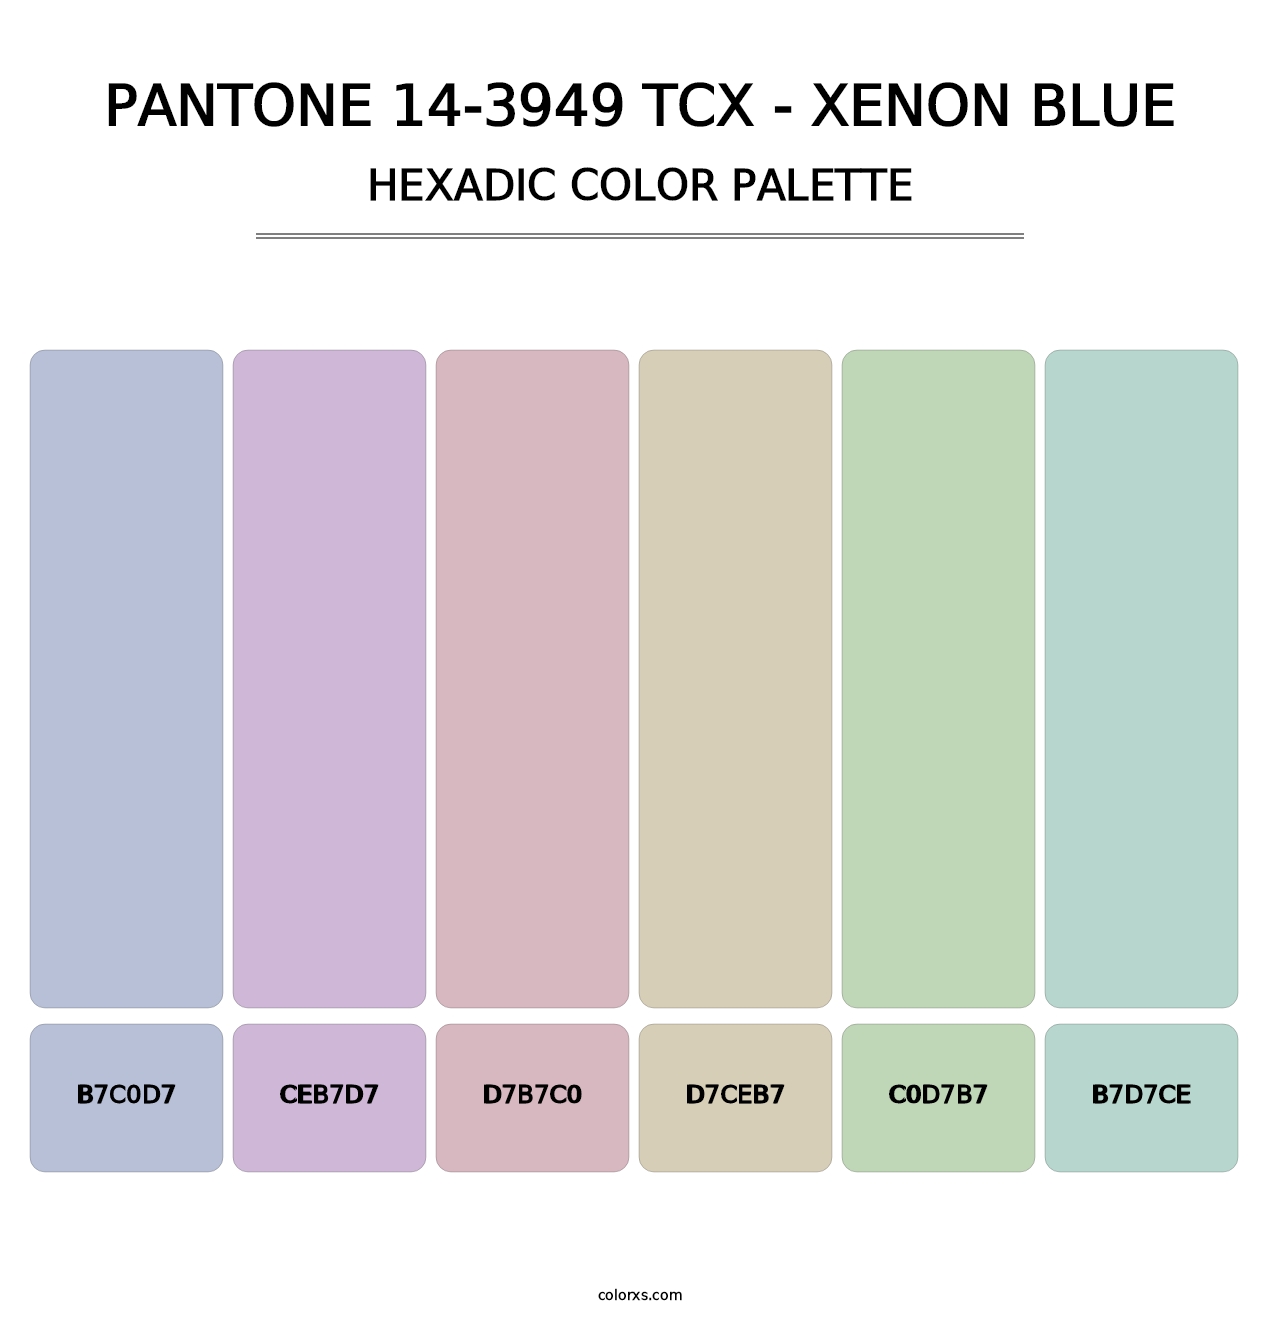 PANTONE 14-3949 TCX - Xenon Blue - Hexadic Color Palette